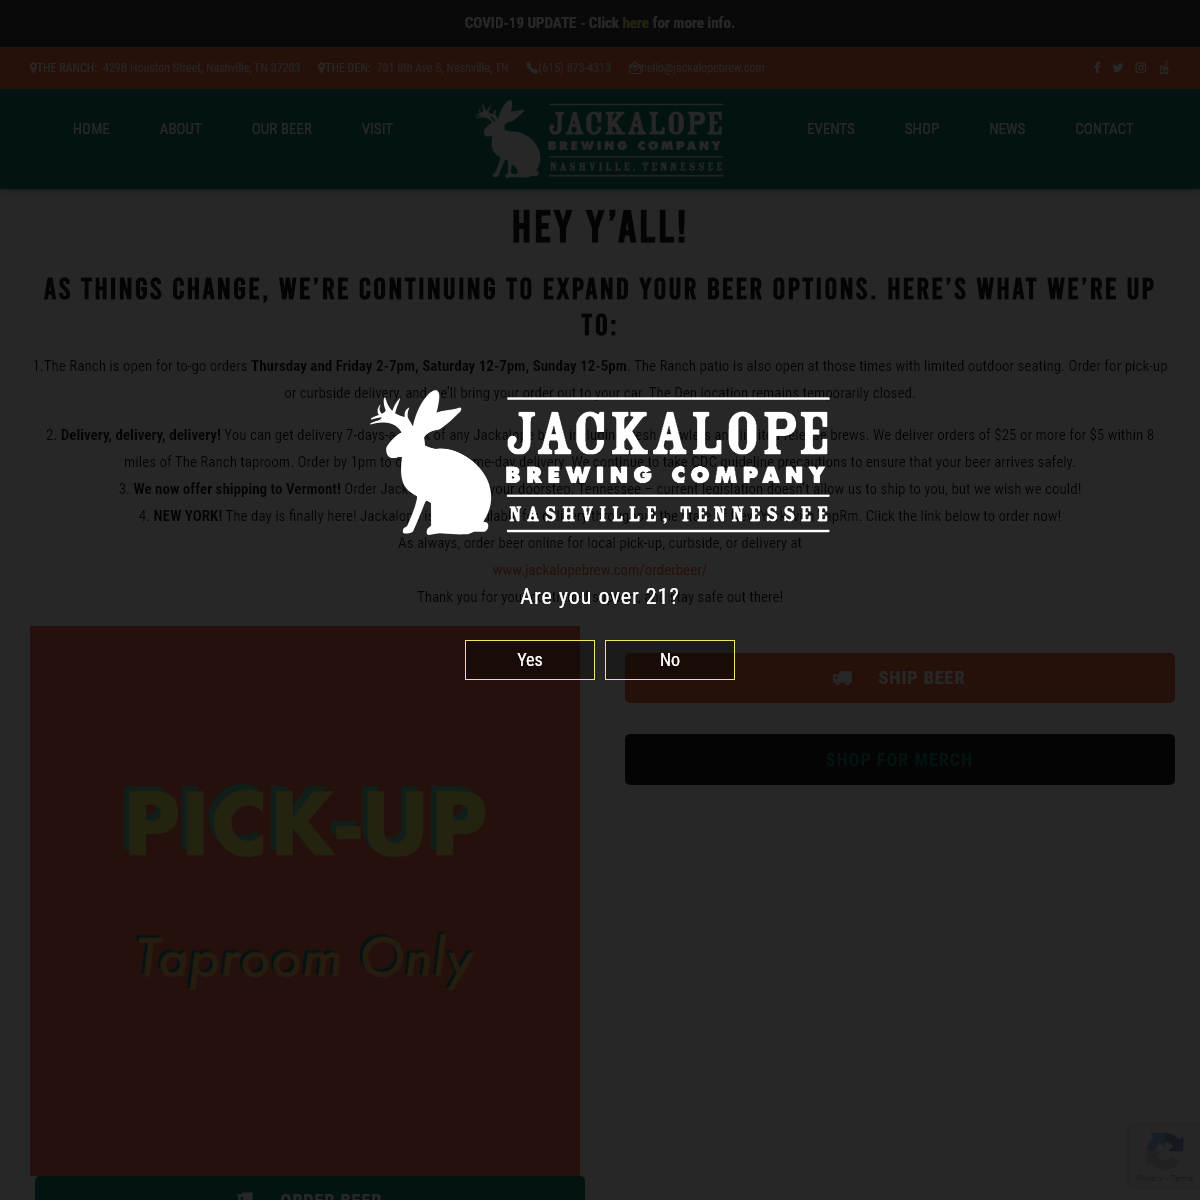 A complete backup of jackalopebrew.com